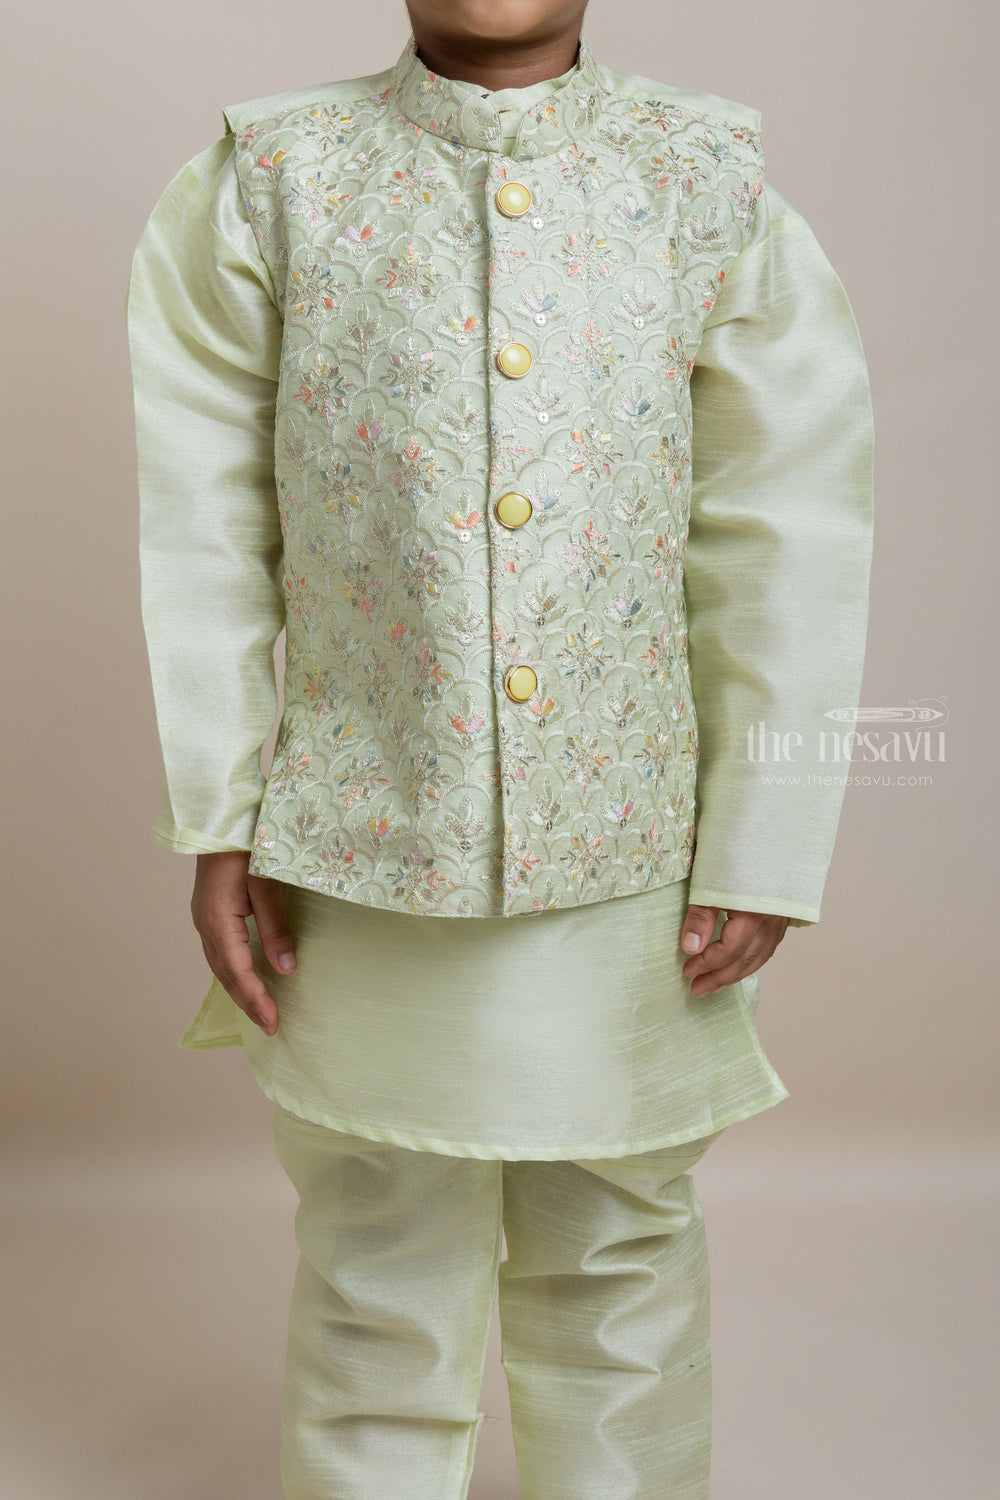 The Nesavu Boys Jacket Sets Green Kurta Set With Jacquard Overjacket for Little Boys Nesavu Latest Kurta Collection For Boys | Premium Kurta Set | The Nesavu